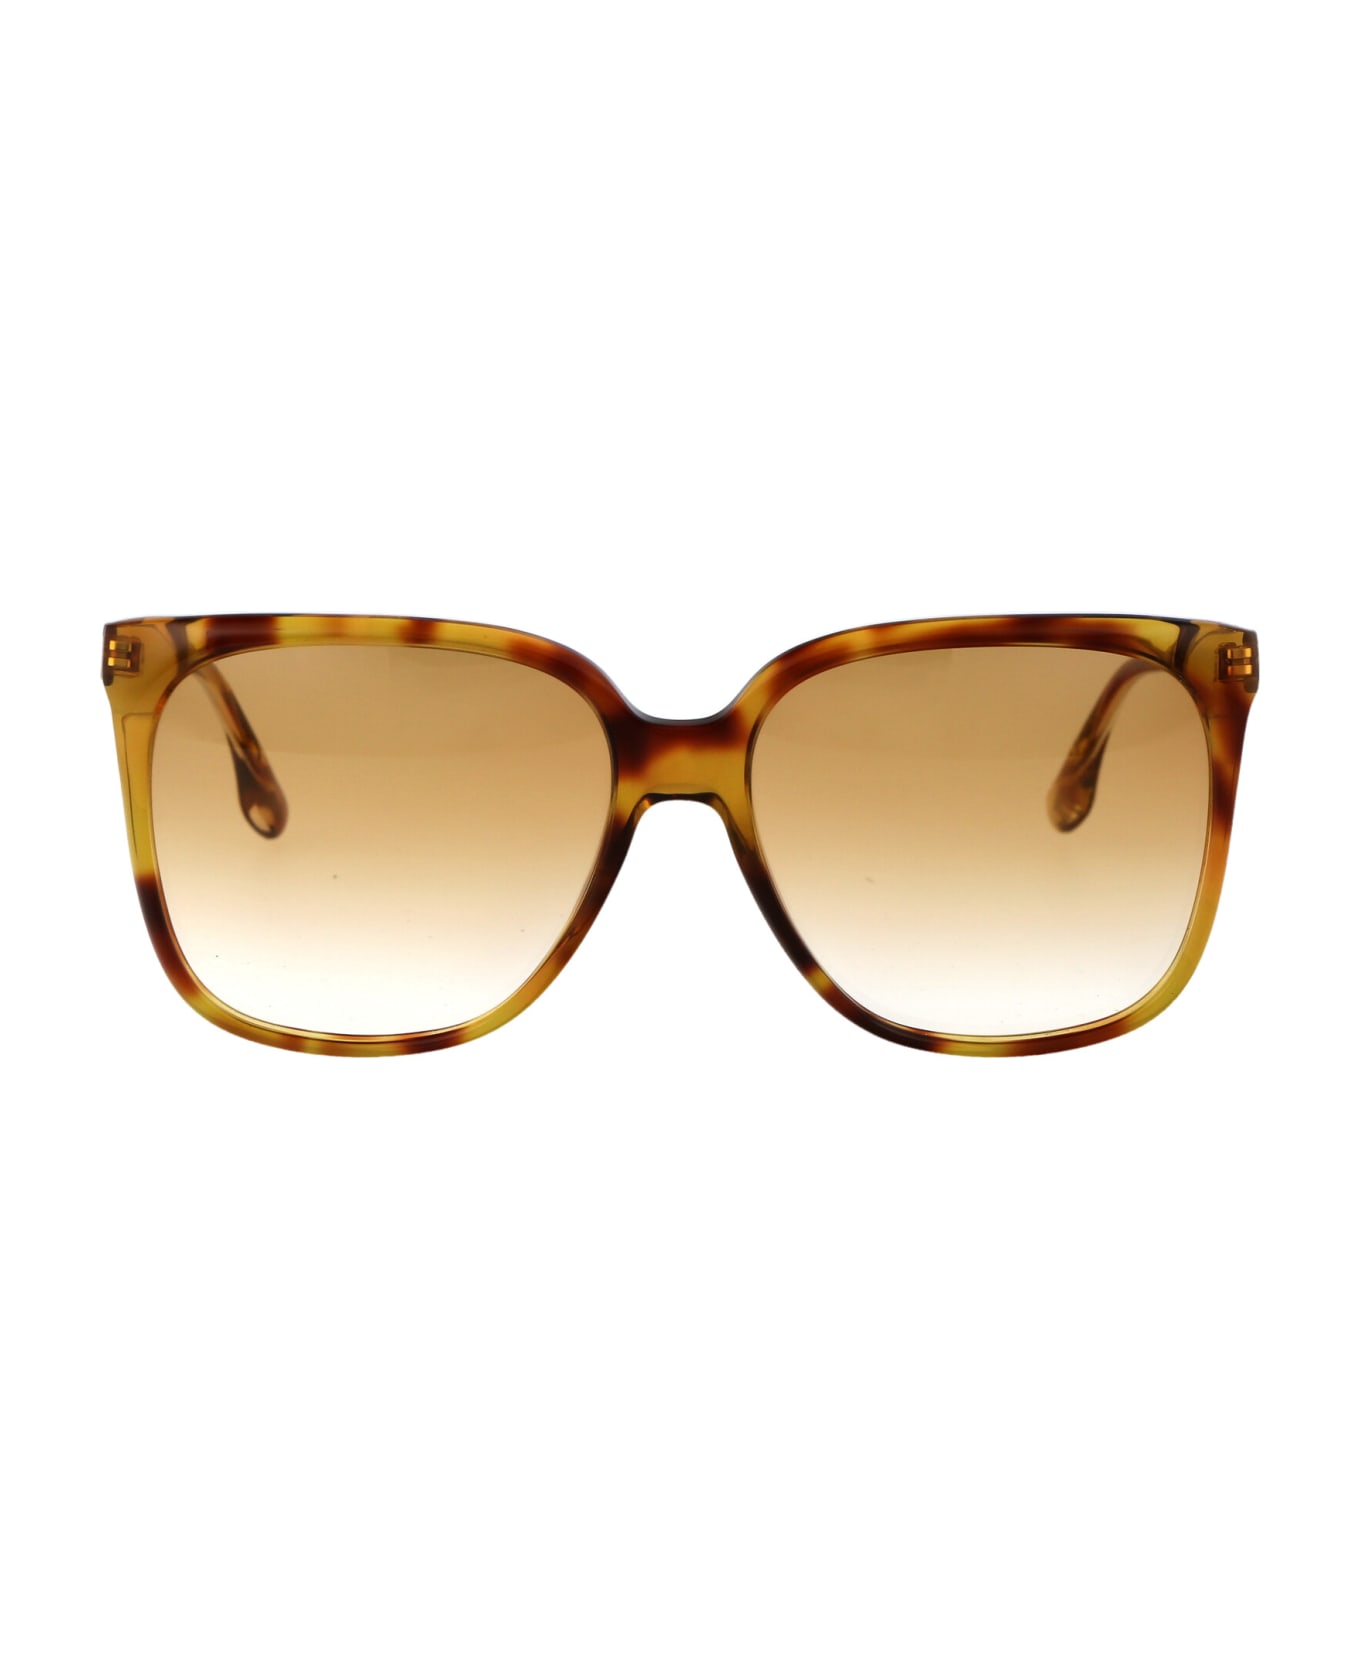 Victoria Beckham Vb610s Sunglasses - 222 BLONDE HAVANA 